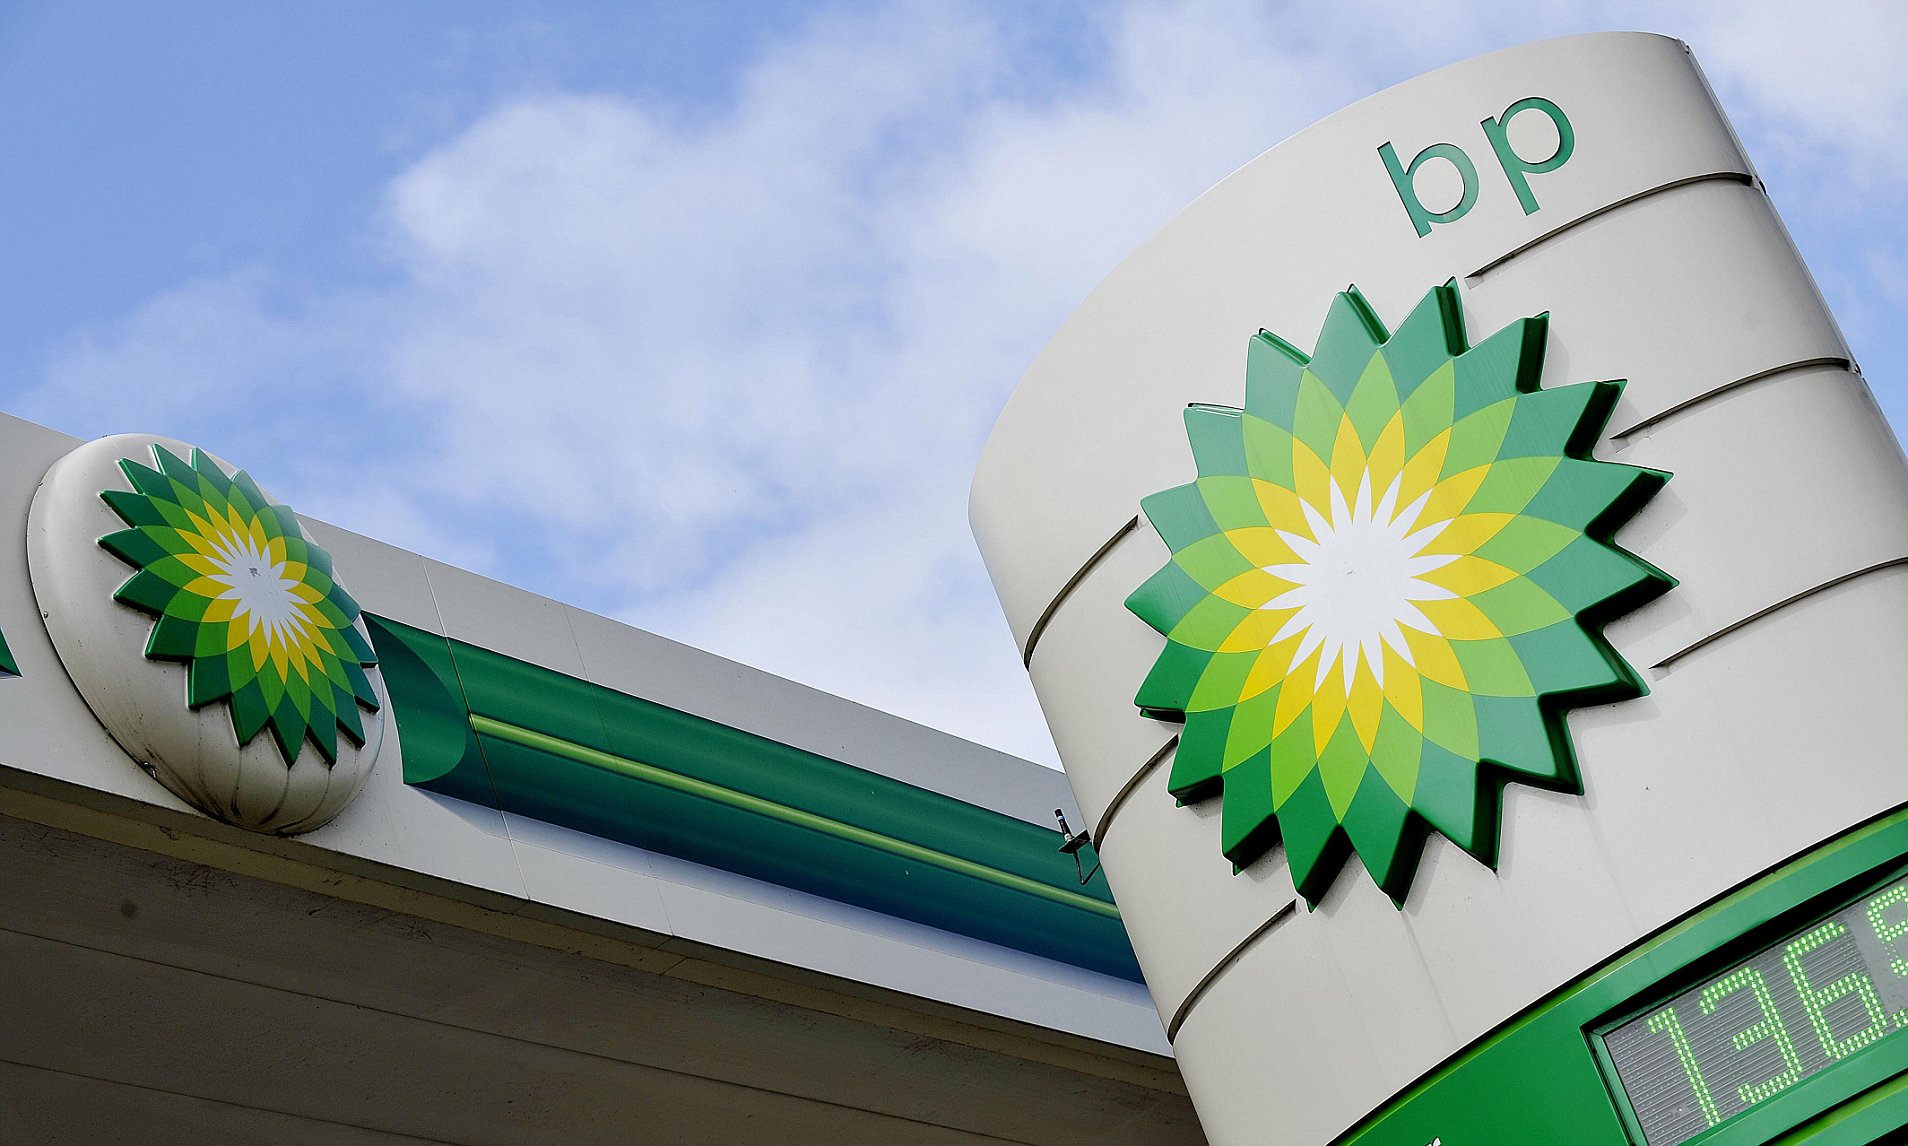 British energy giant BP